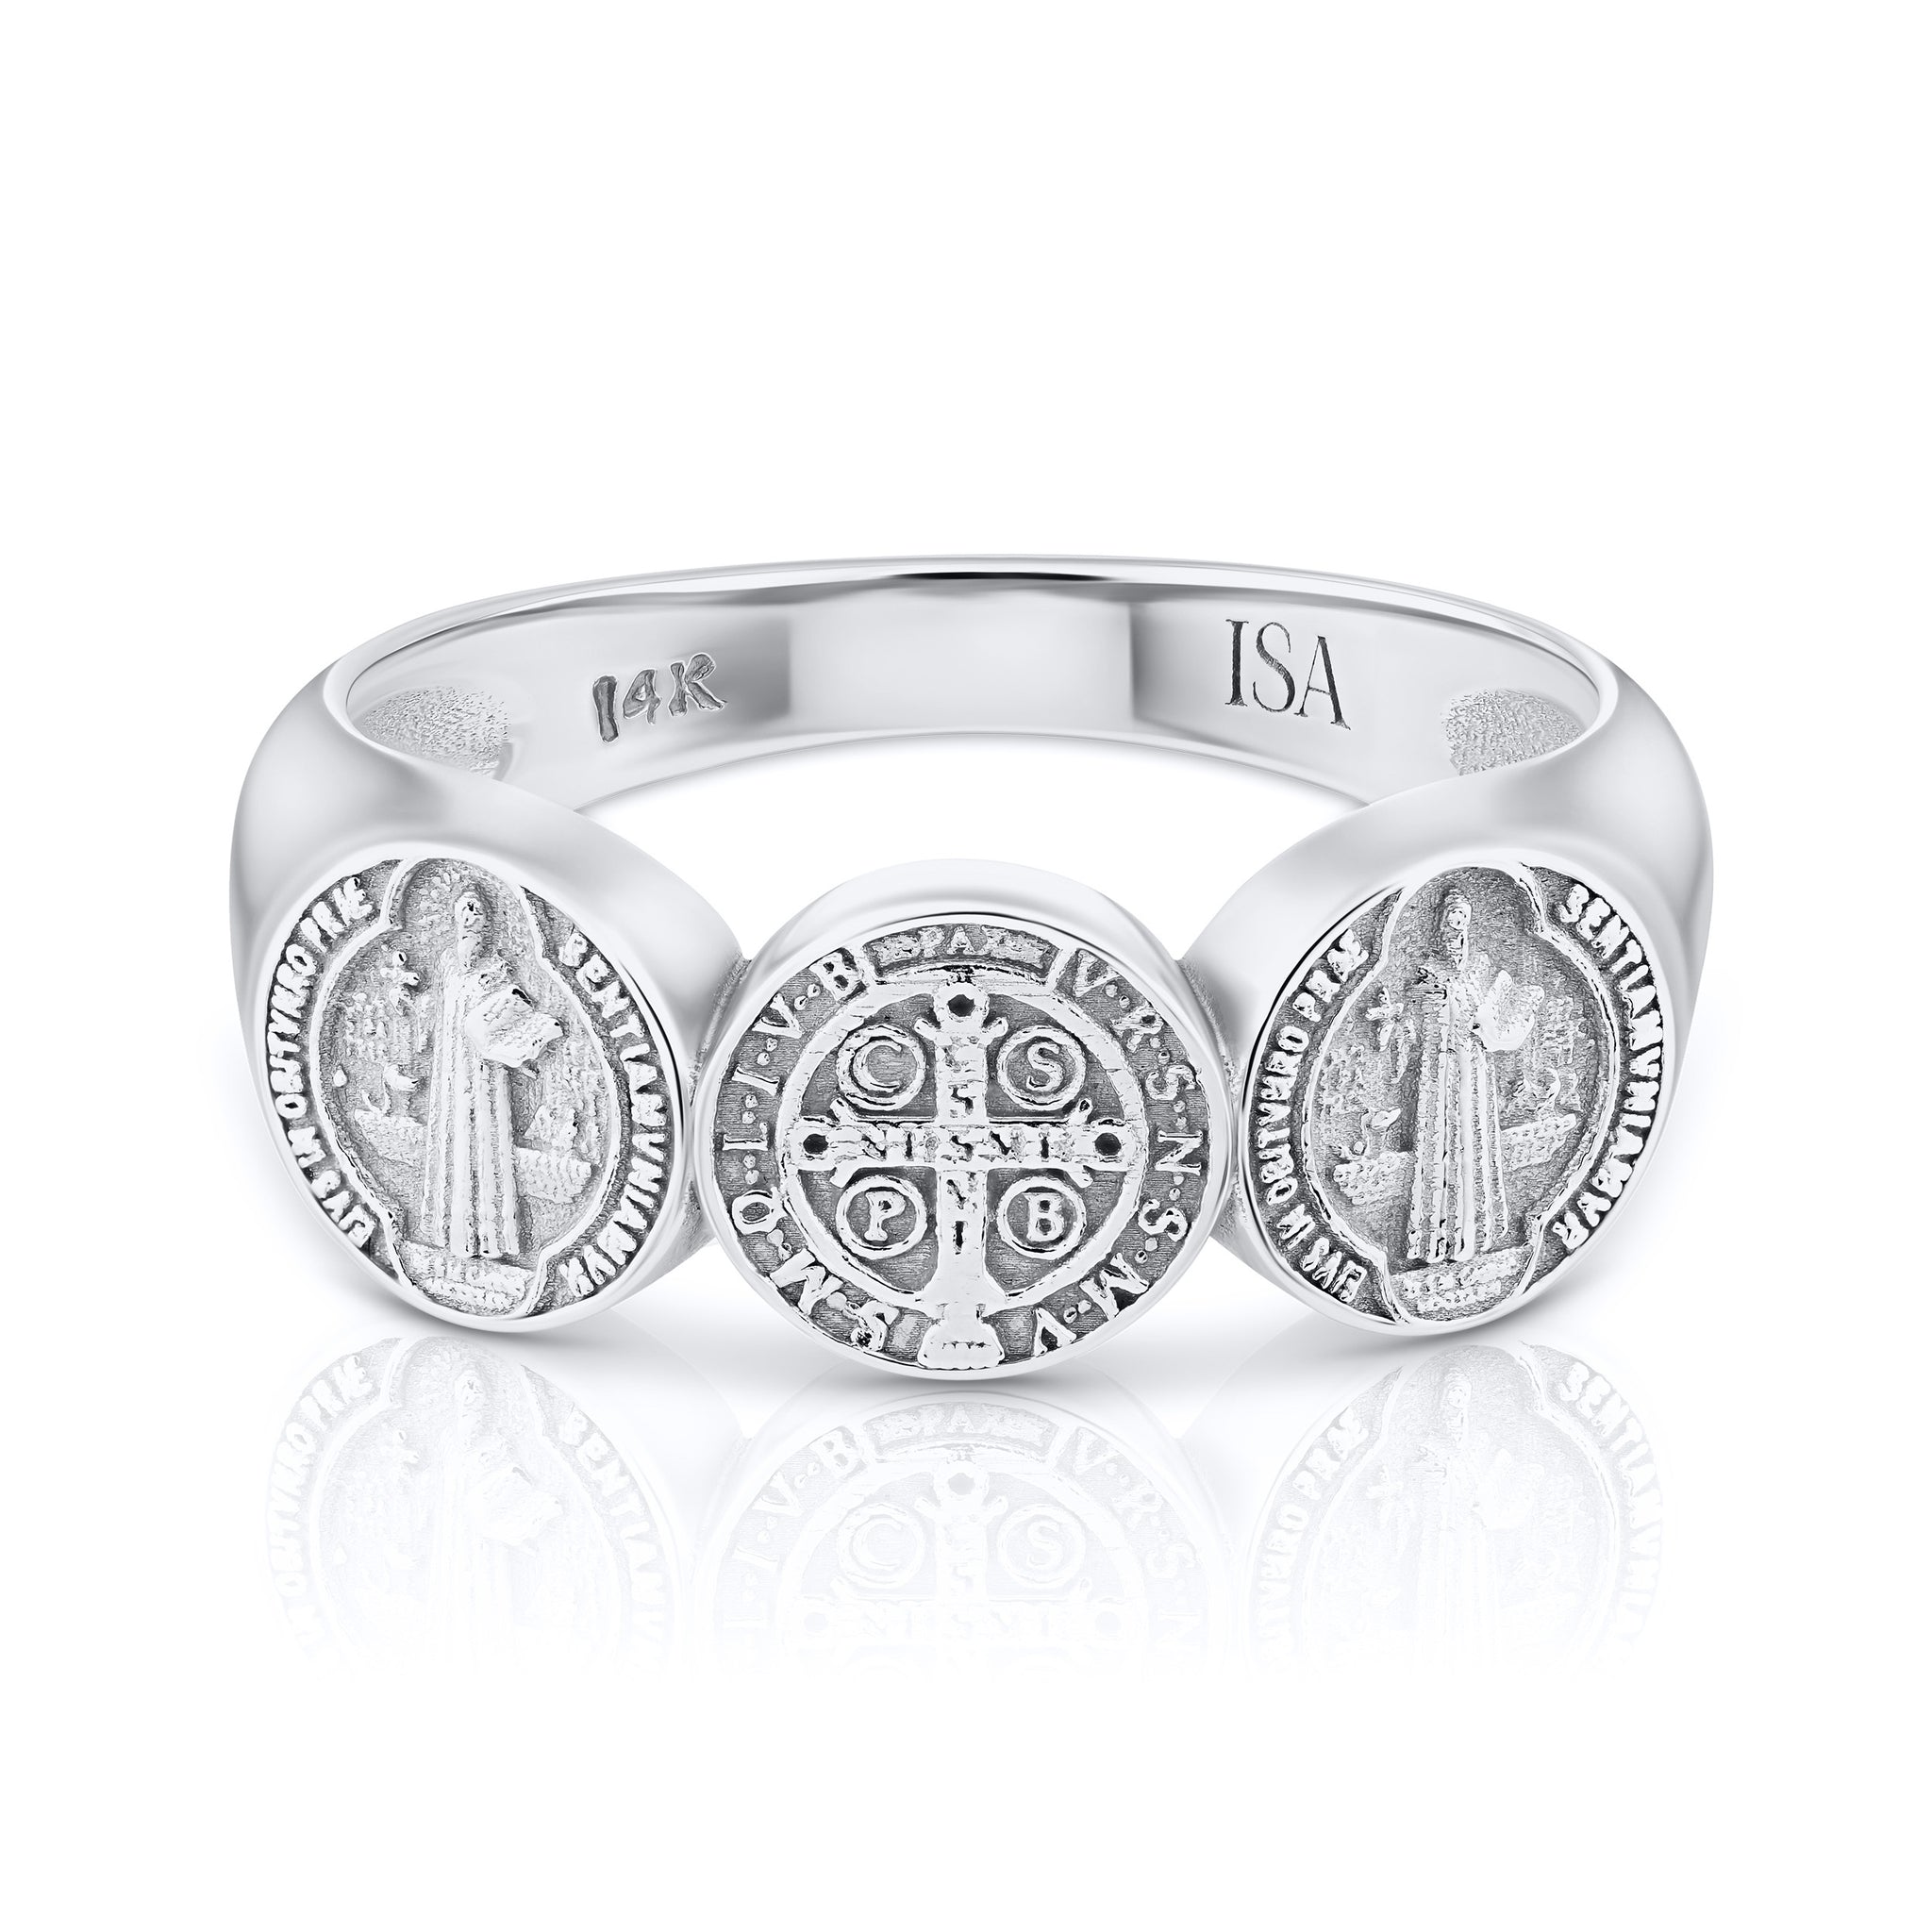 Saint Benedict Coin Ring